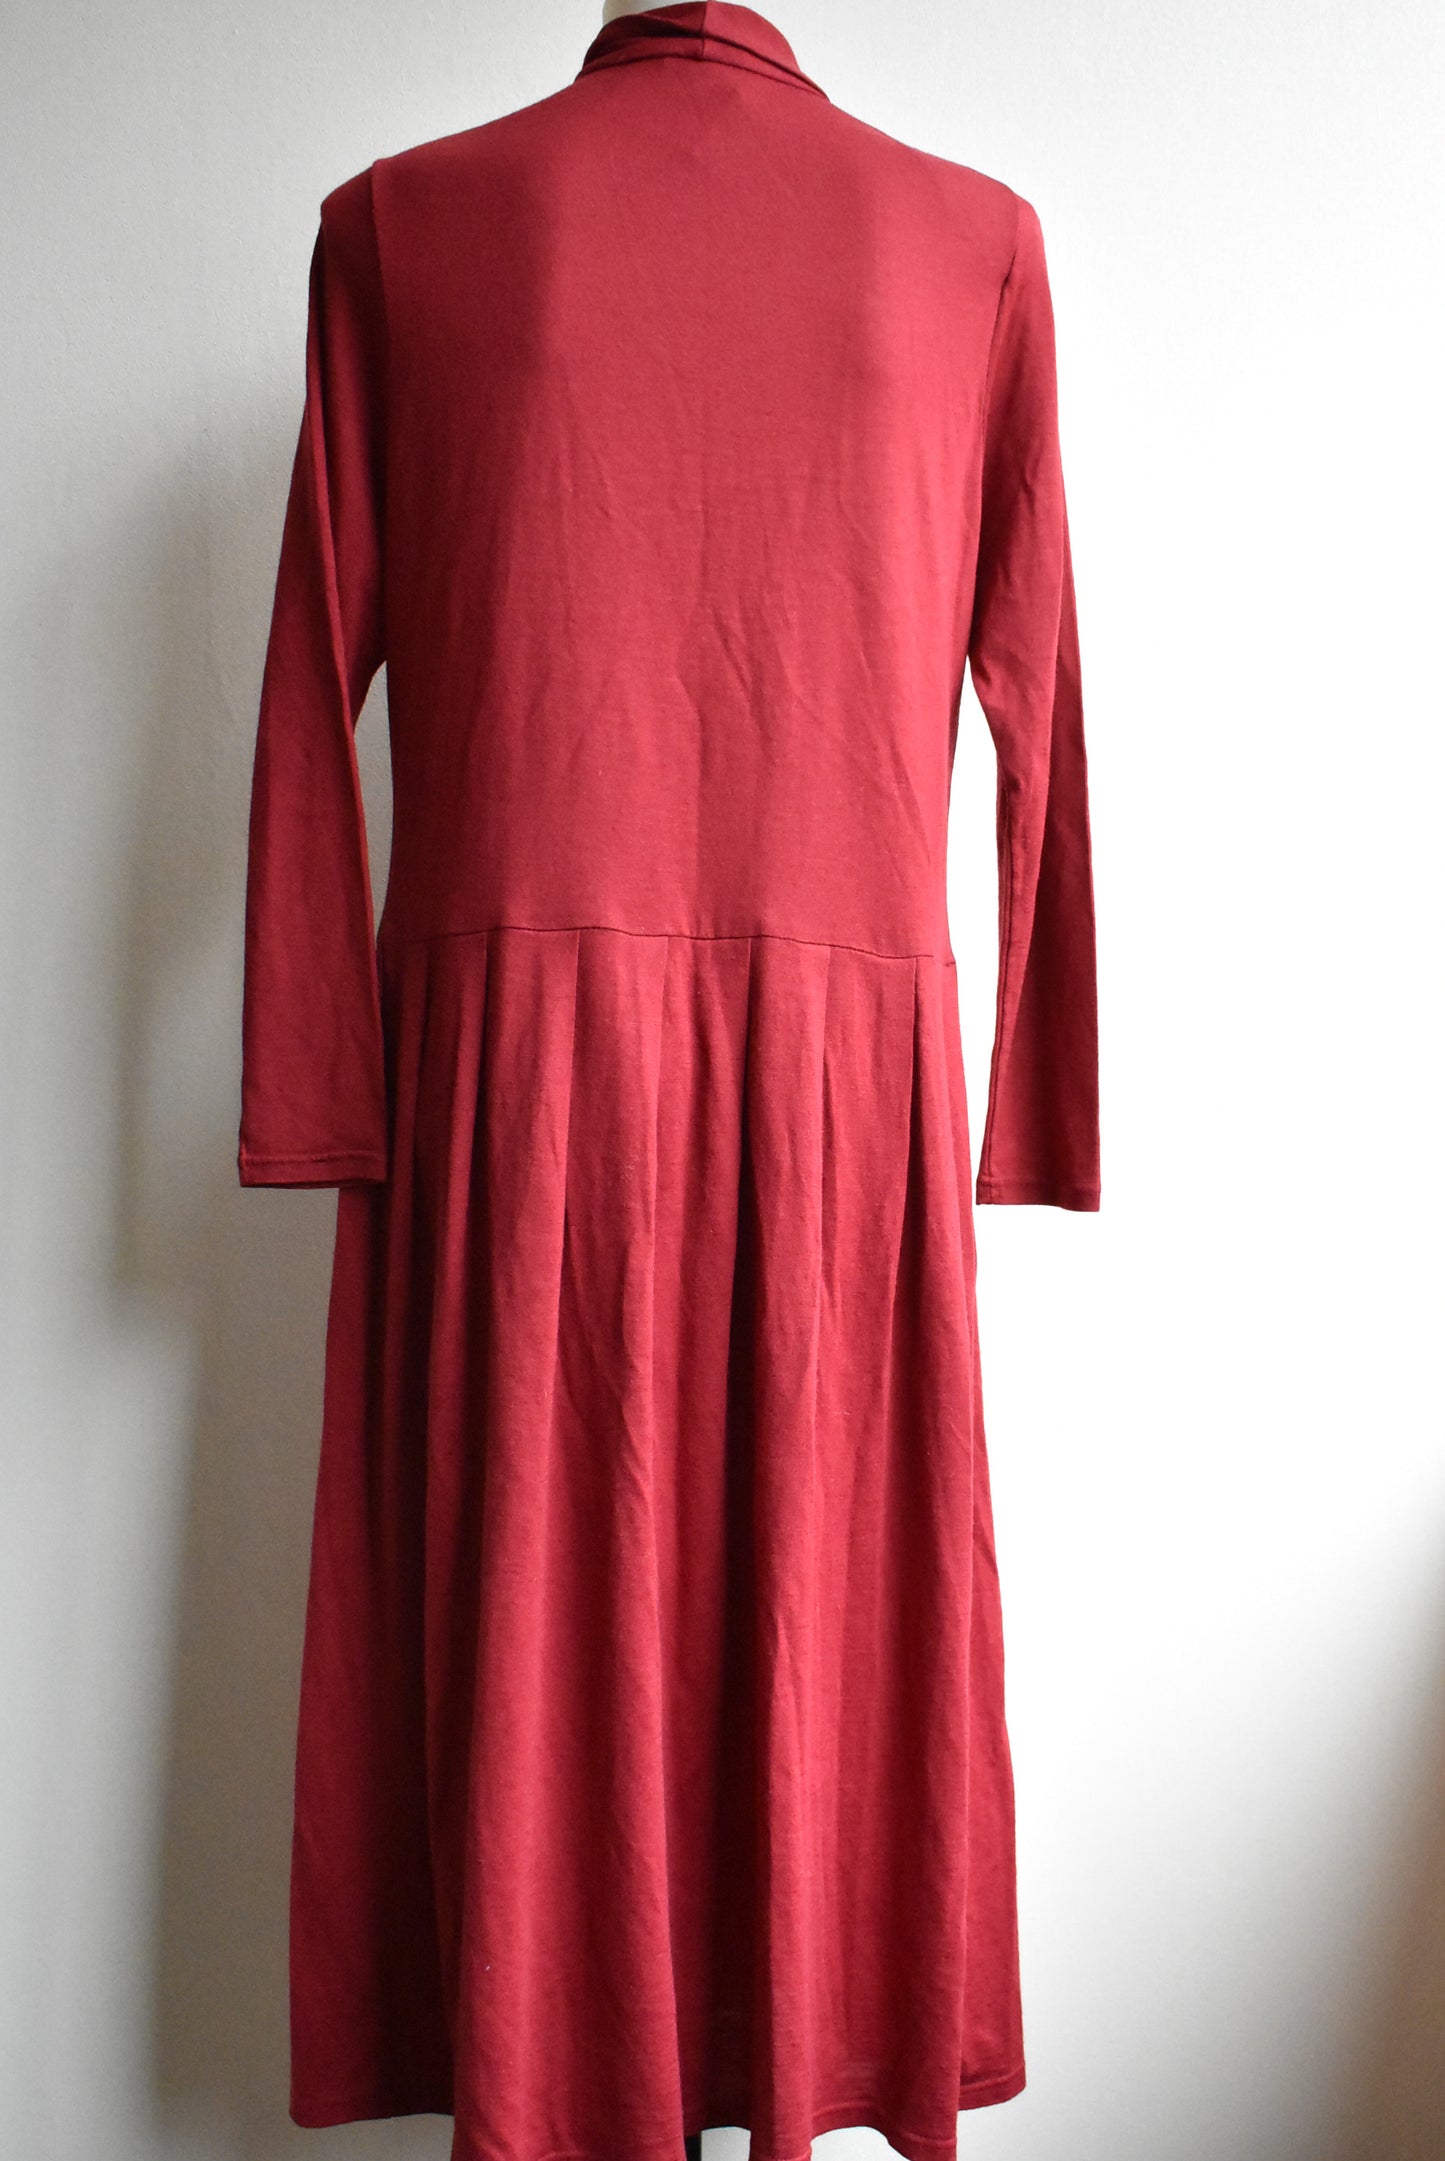 Clothkits burgundy wool blend dress, size 12/14